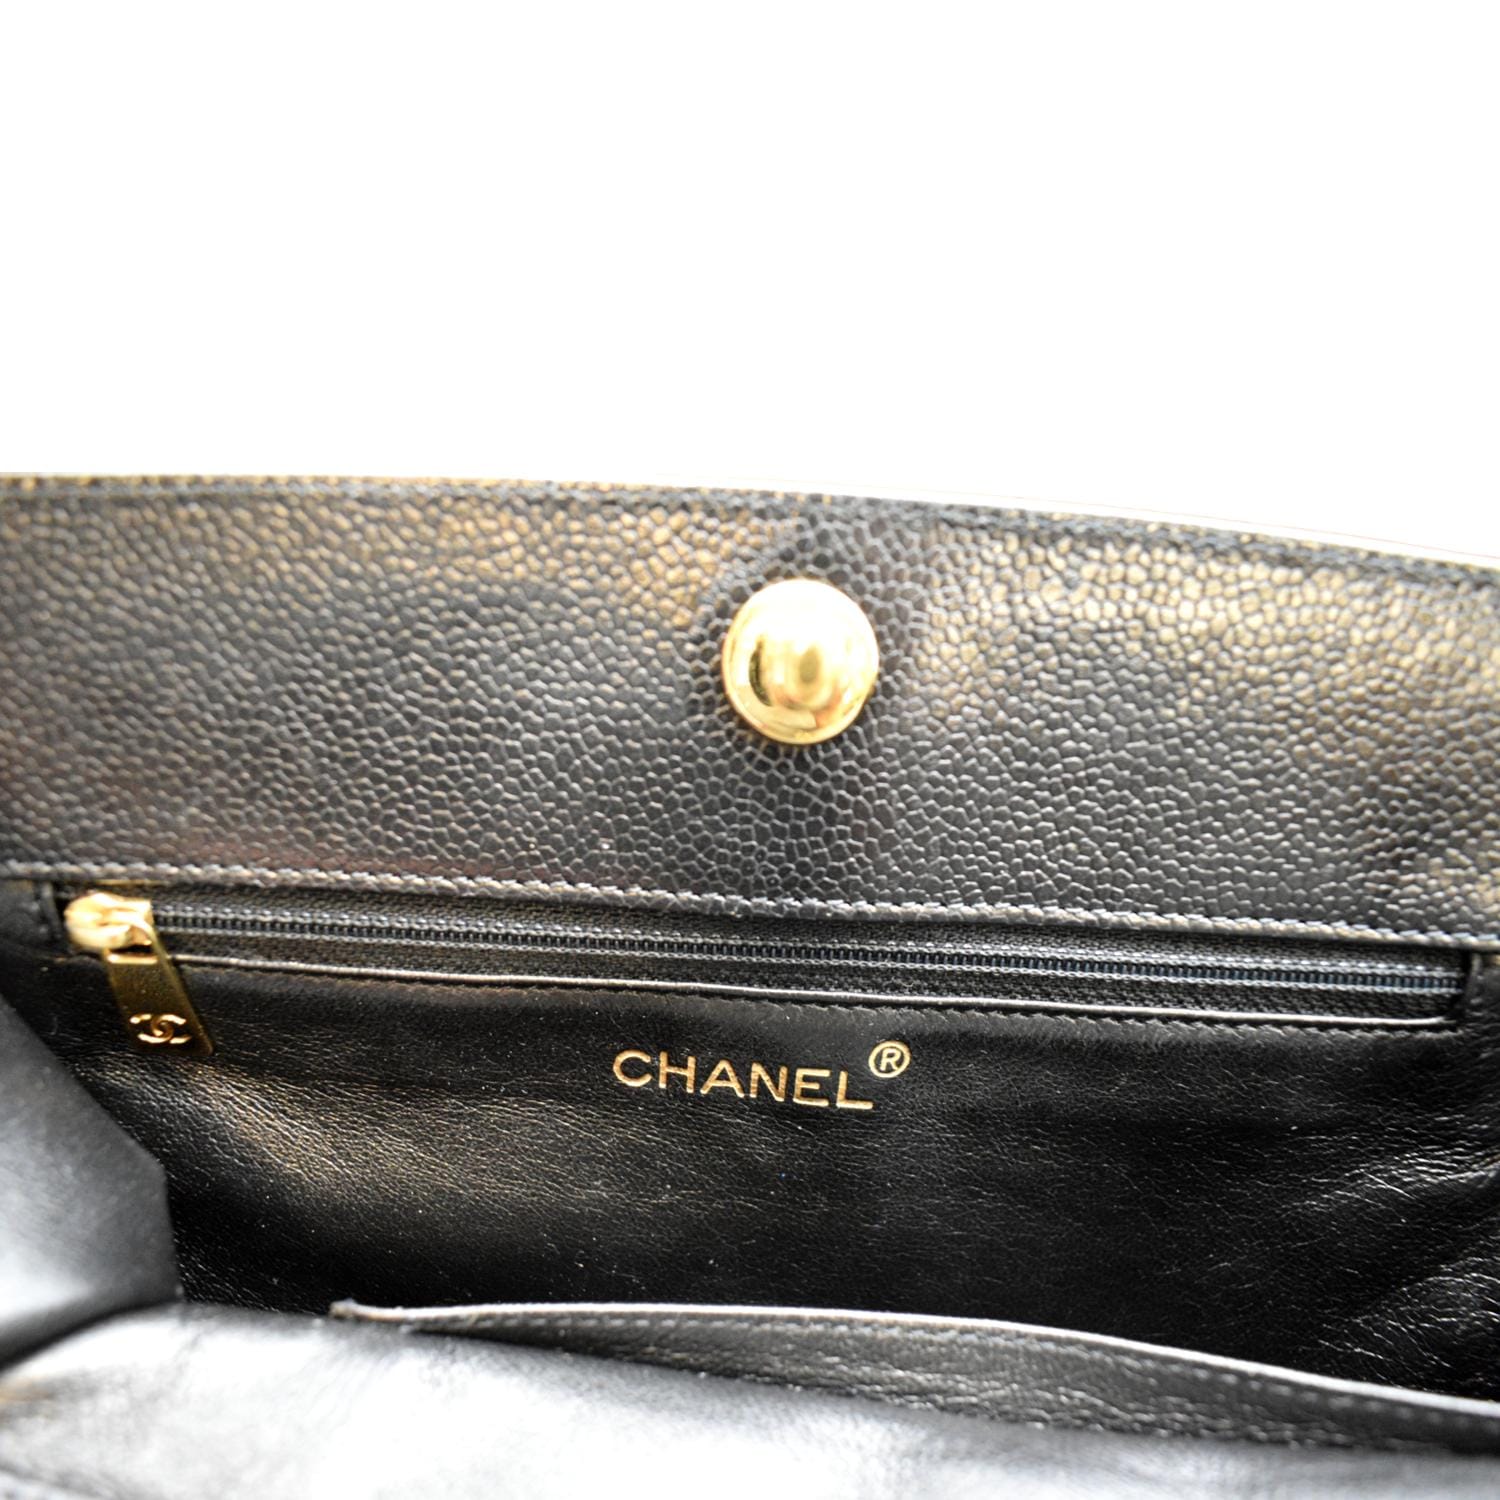 CHANEL Large Gold CC Caviar Chain Shoulder Bag Black Leather Purse